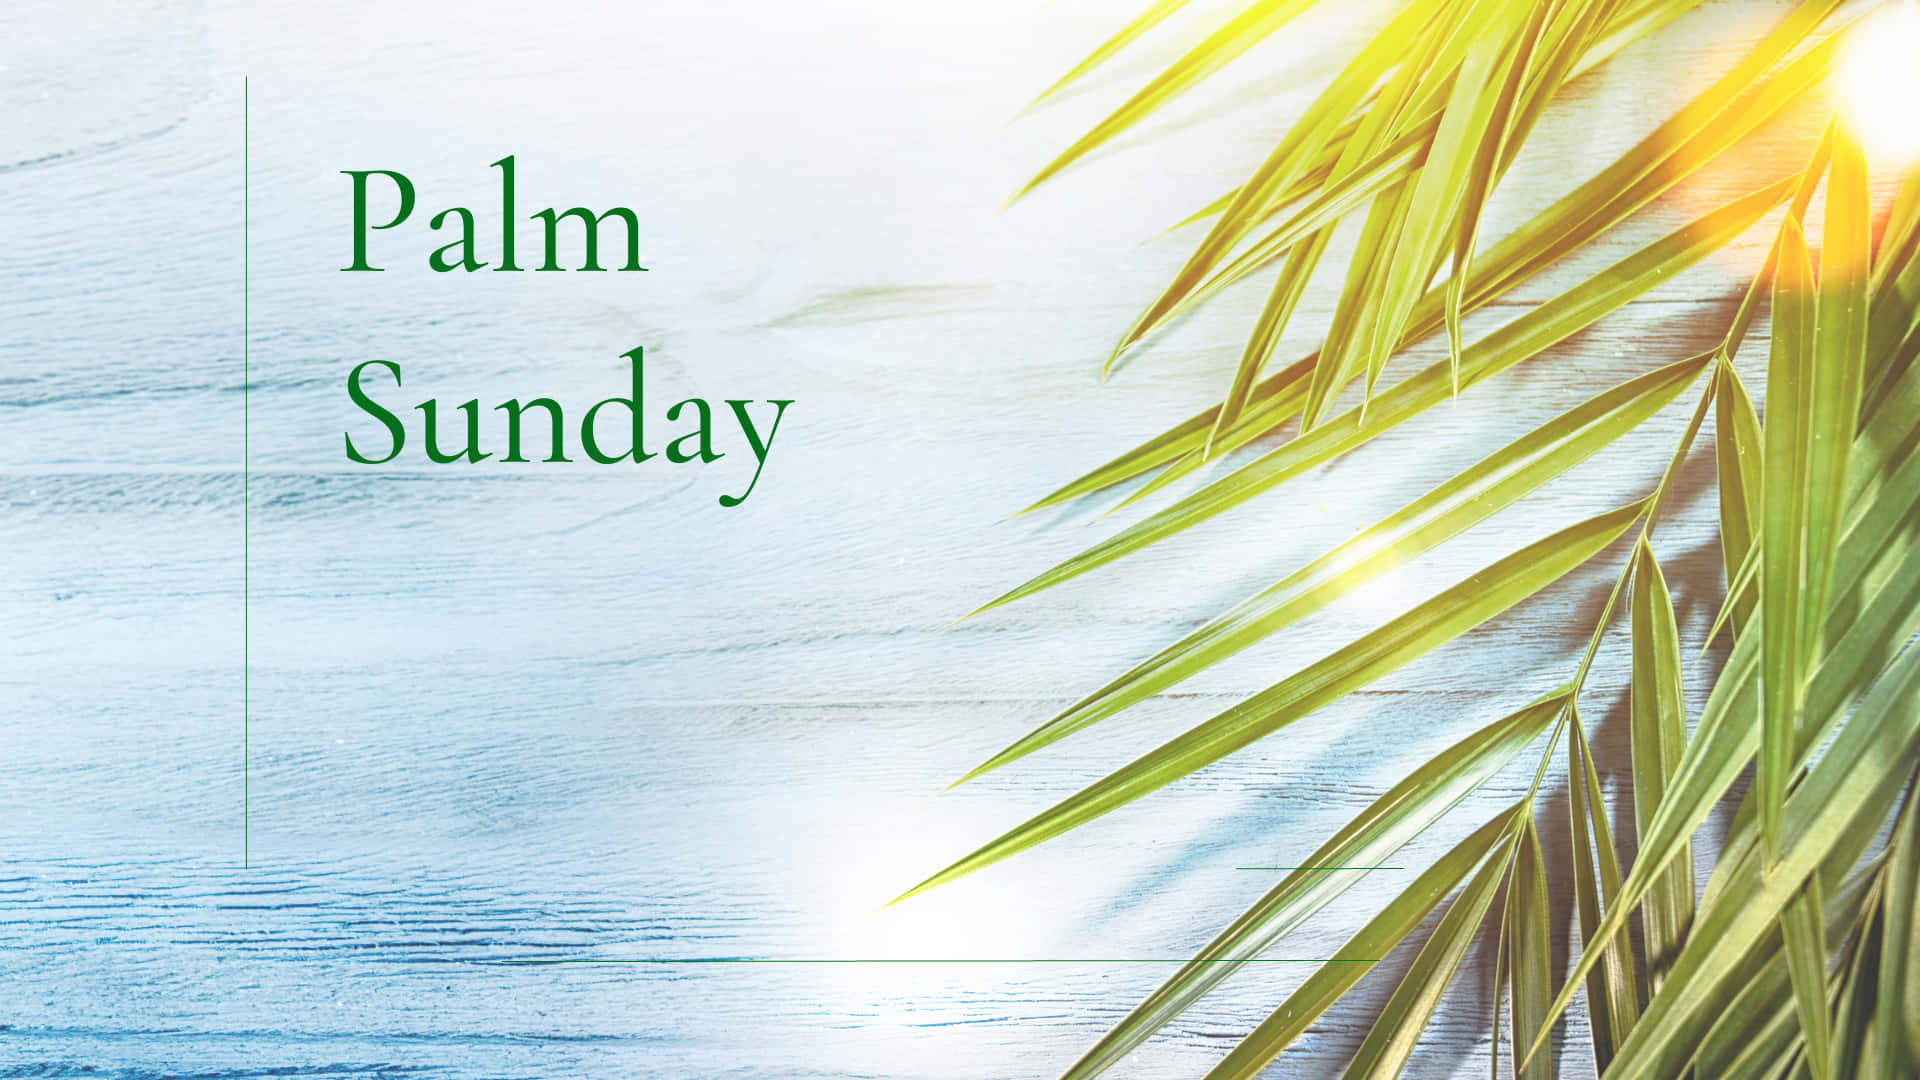 Artistic Palm Sunday Text Background